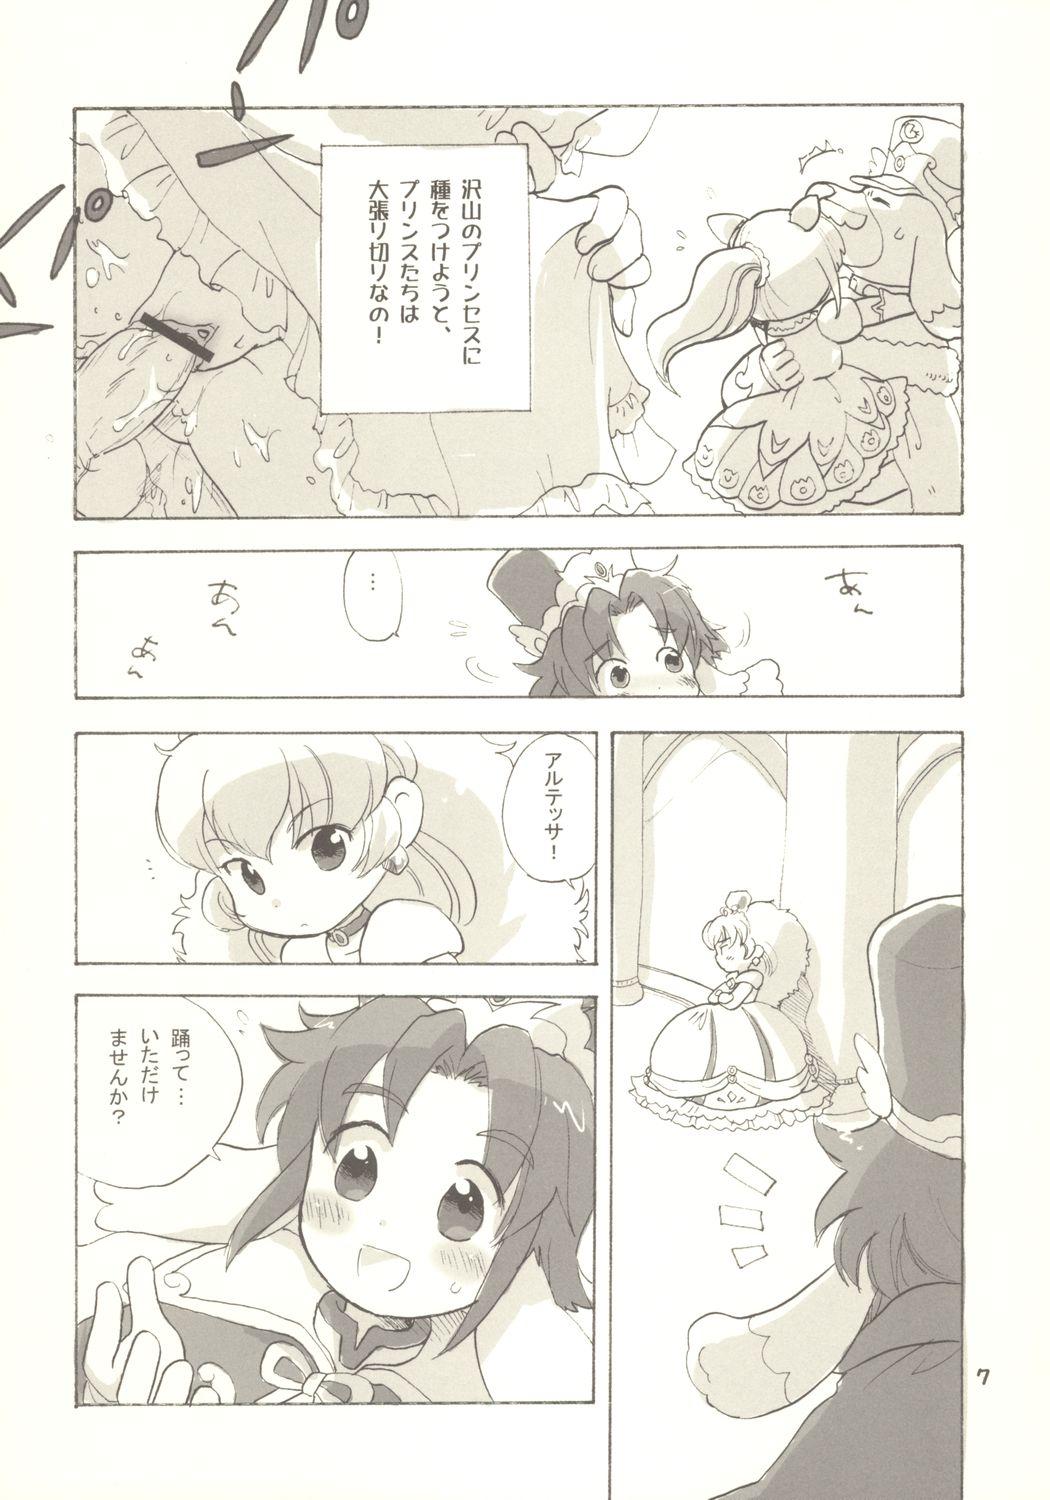 Pussylicking Egao ni Nare - Please give me smiling face - Fushigiboshi no futagohime Tia - Page 6